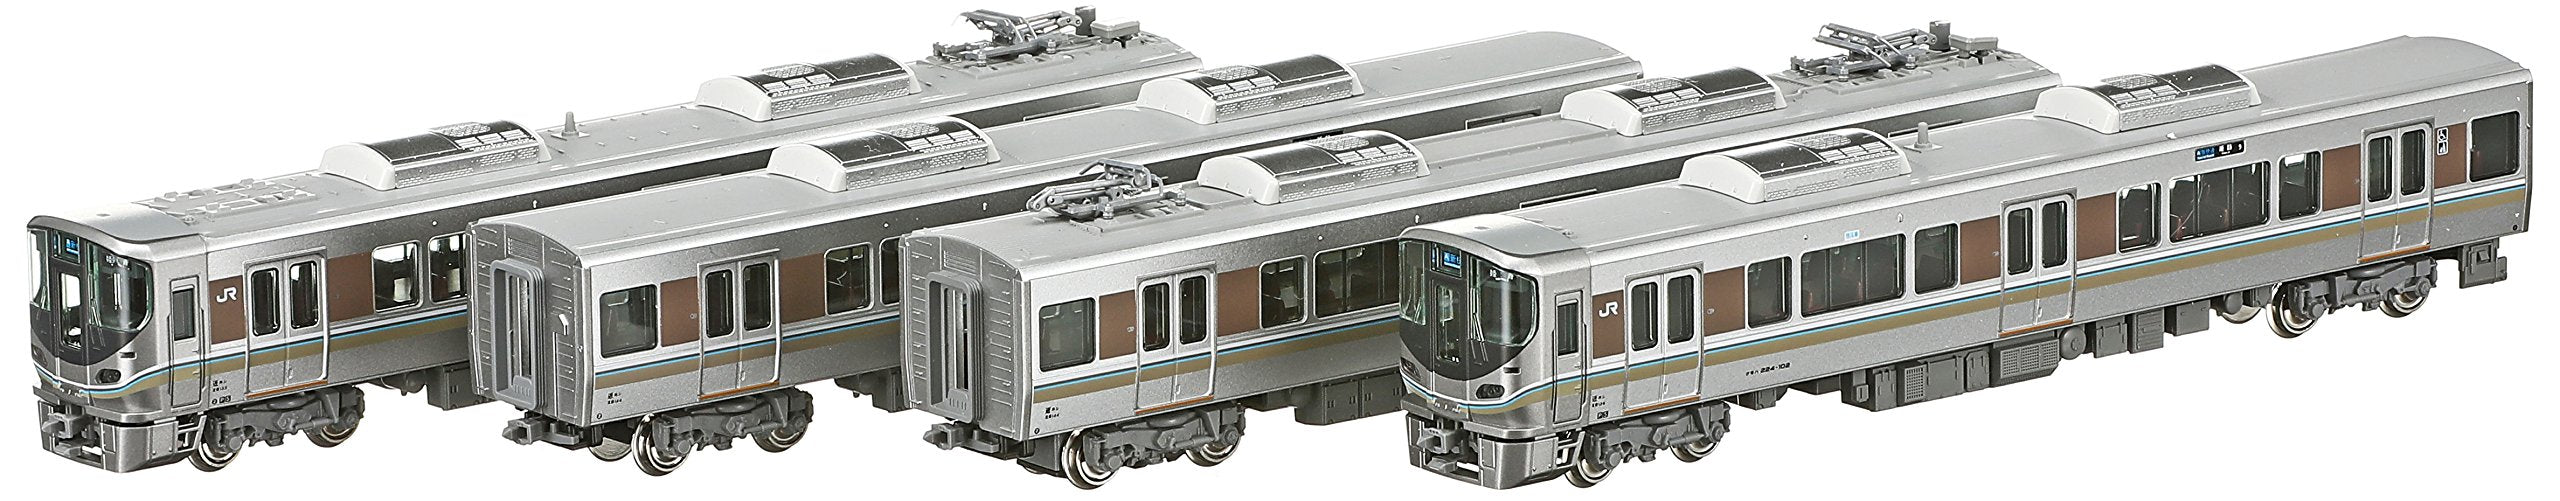 KATO N Gauge Series 225-100 New Rapid 4-car set 10-1440 Model Railroad Train_1